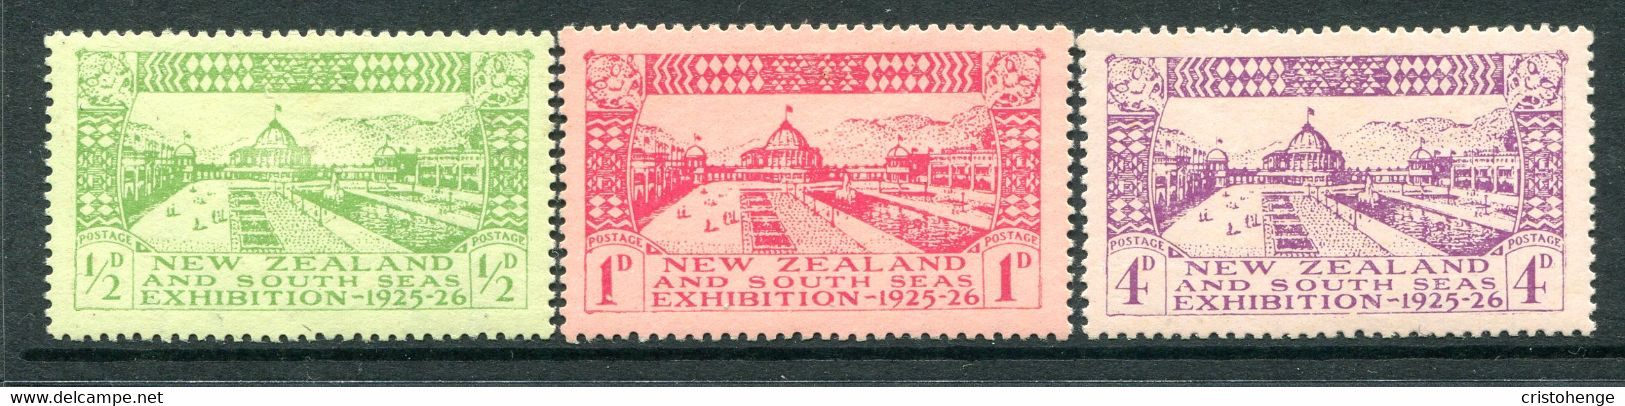 New Zealand 1925 Dunedin Exhibition Set HM (SG 463-465) - Ongebruikt